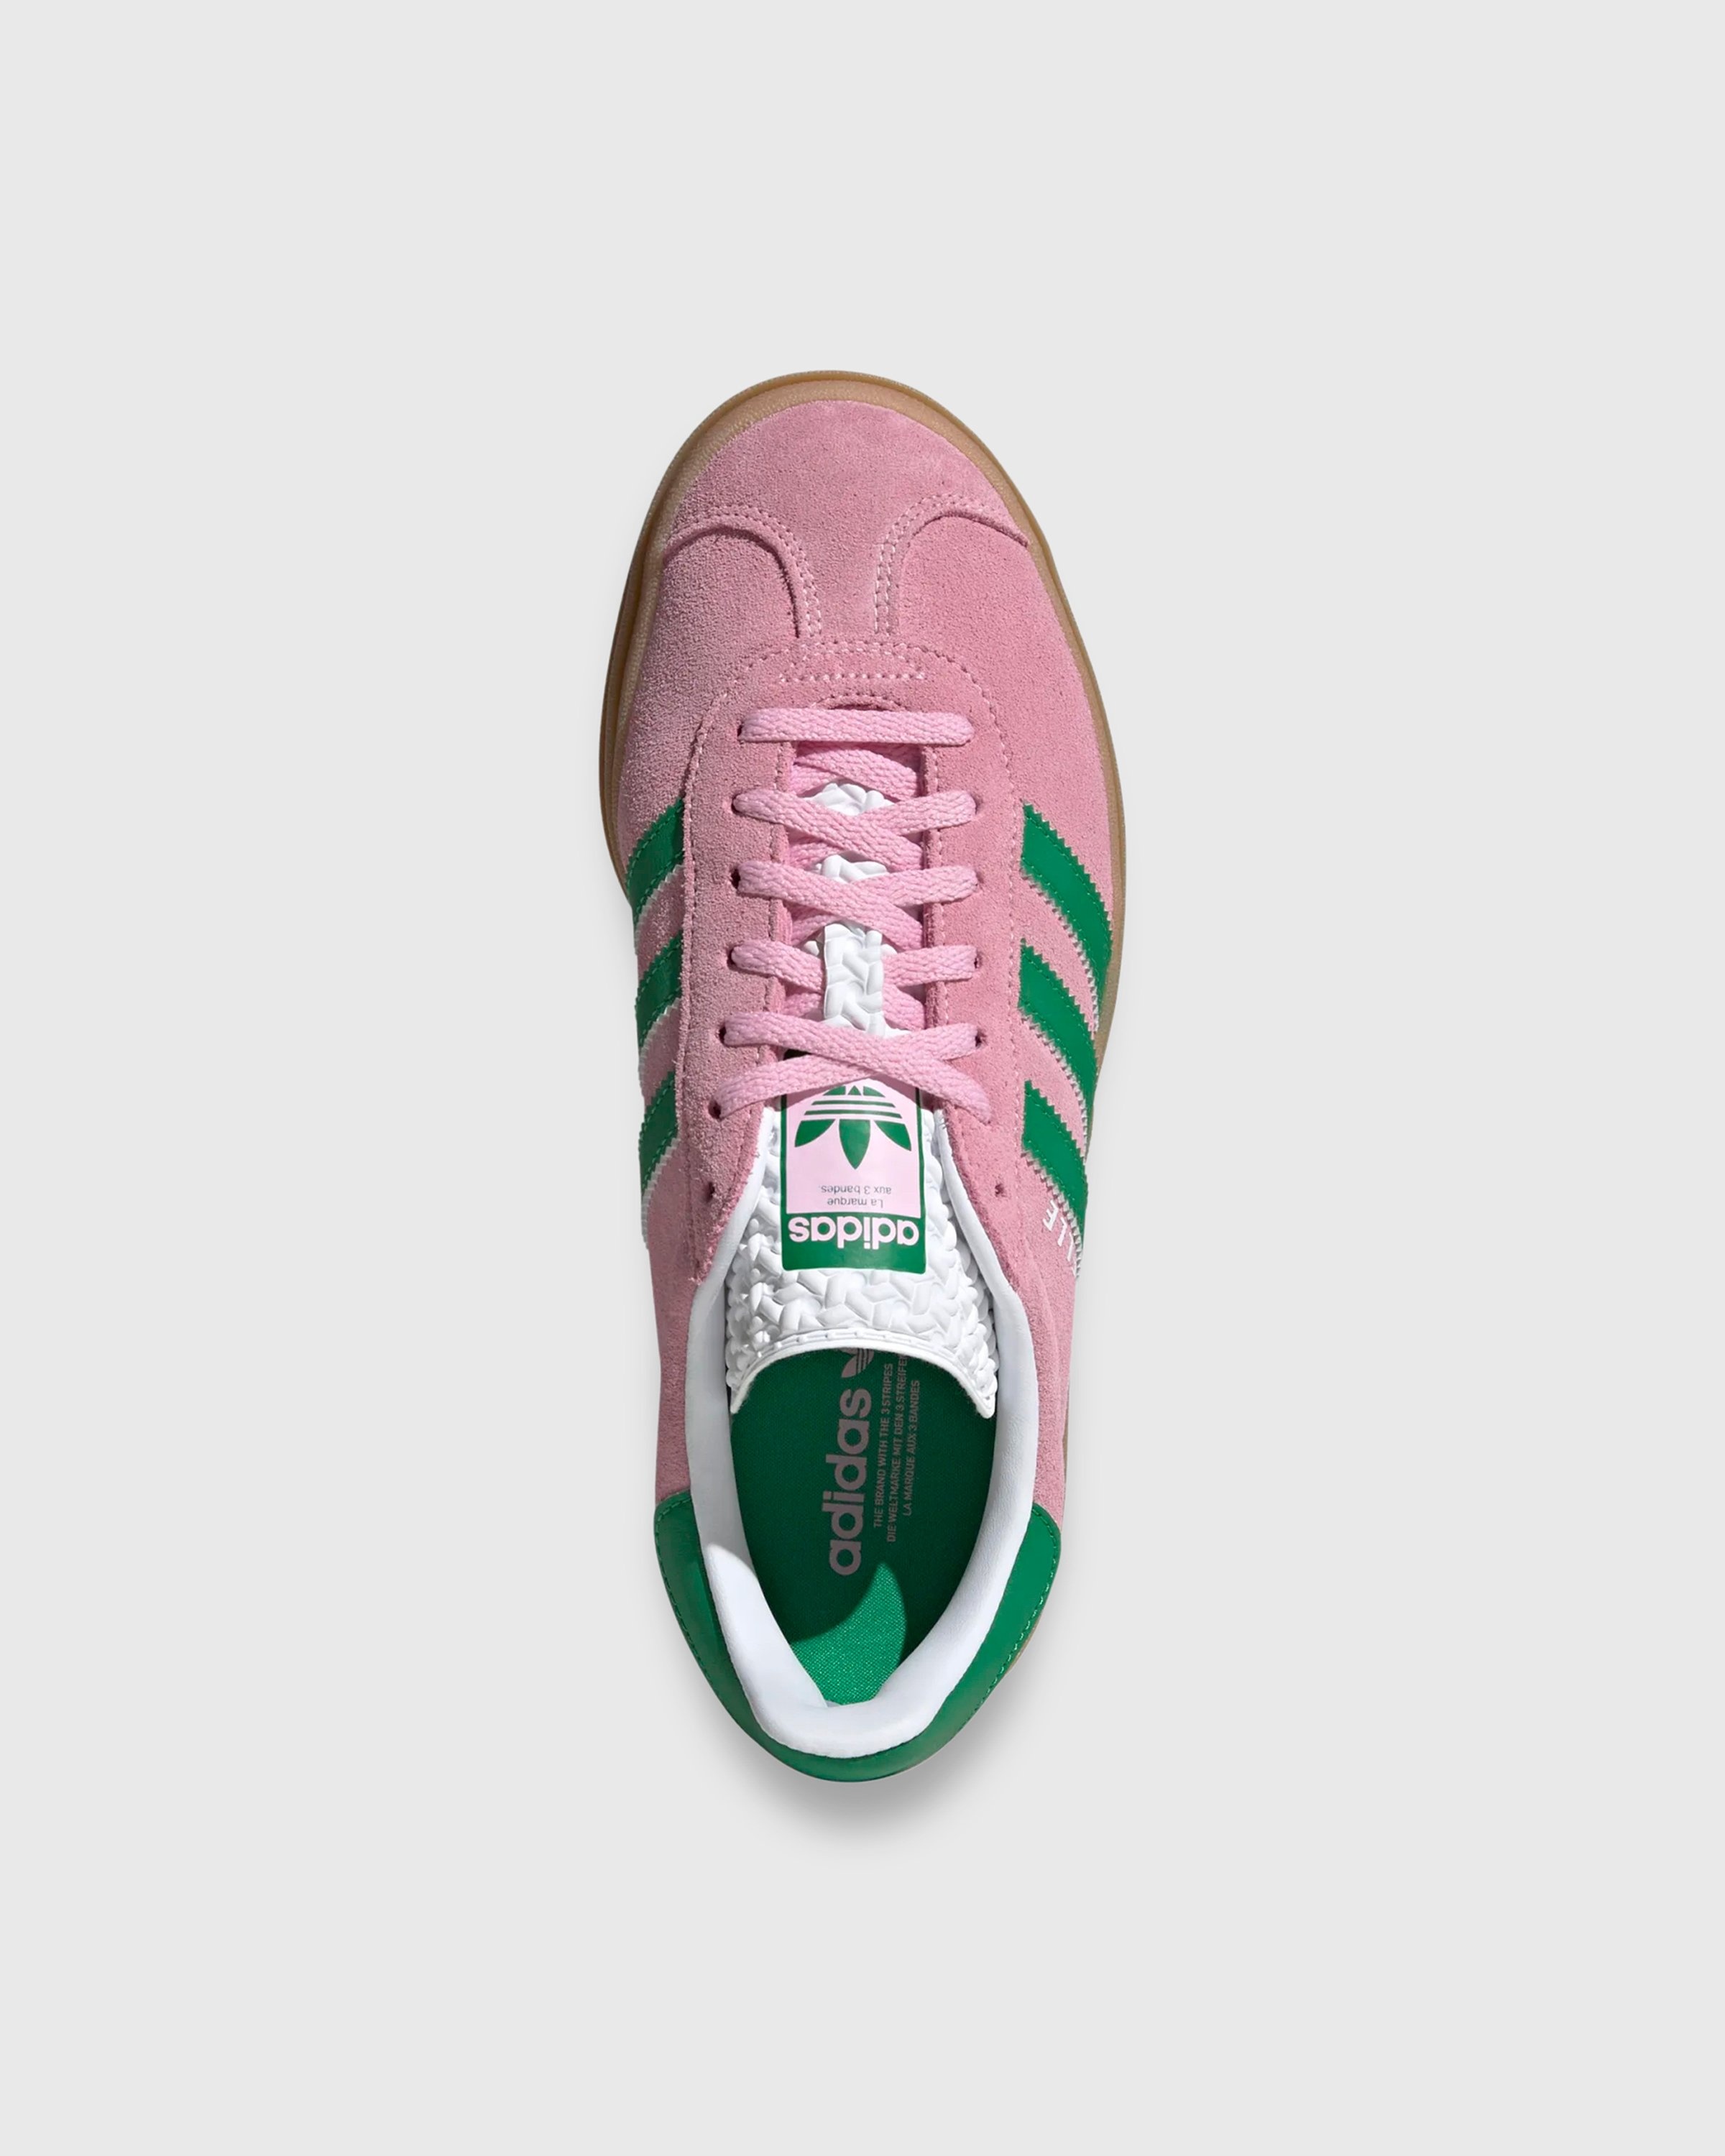 Adidas – Gazelle Bold True Pink | Highsnobiety Shop